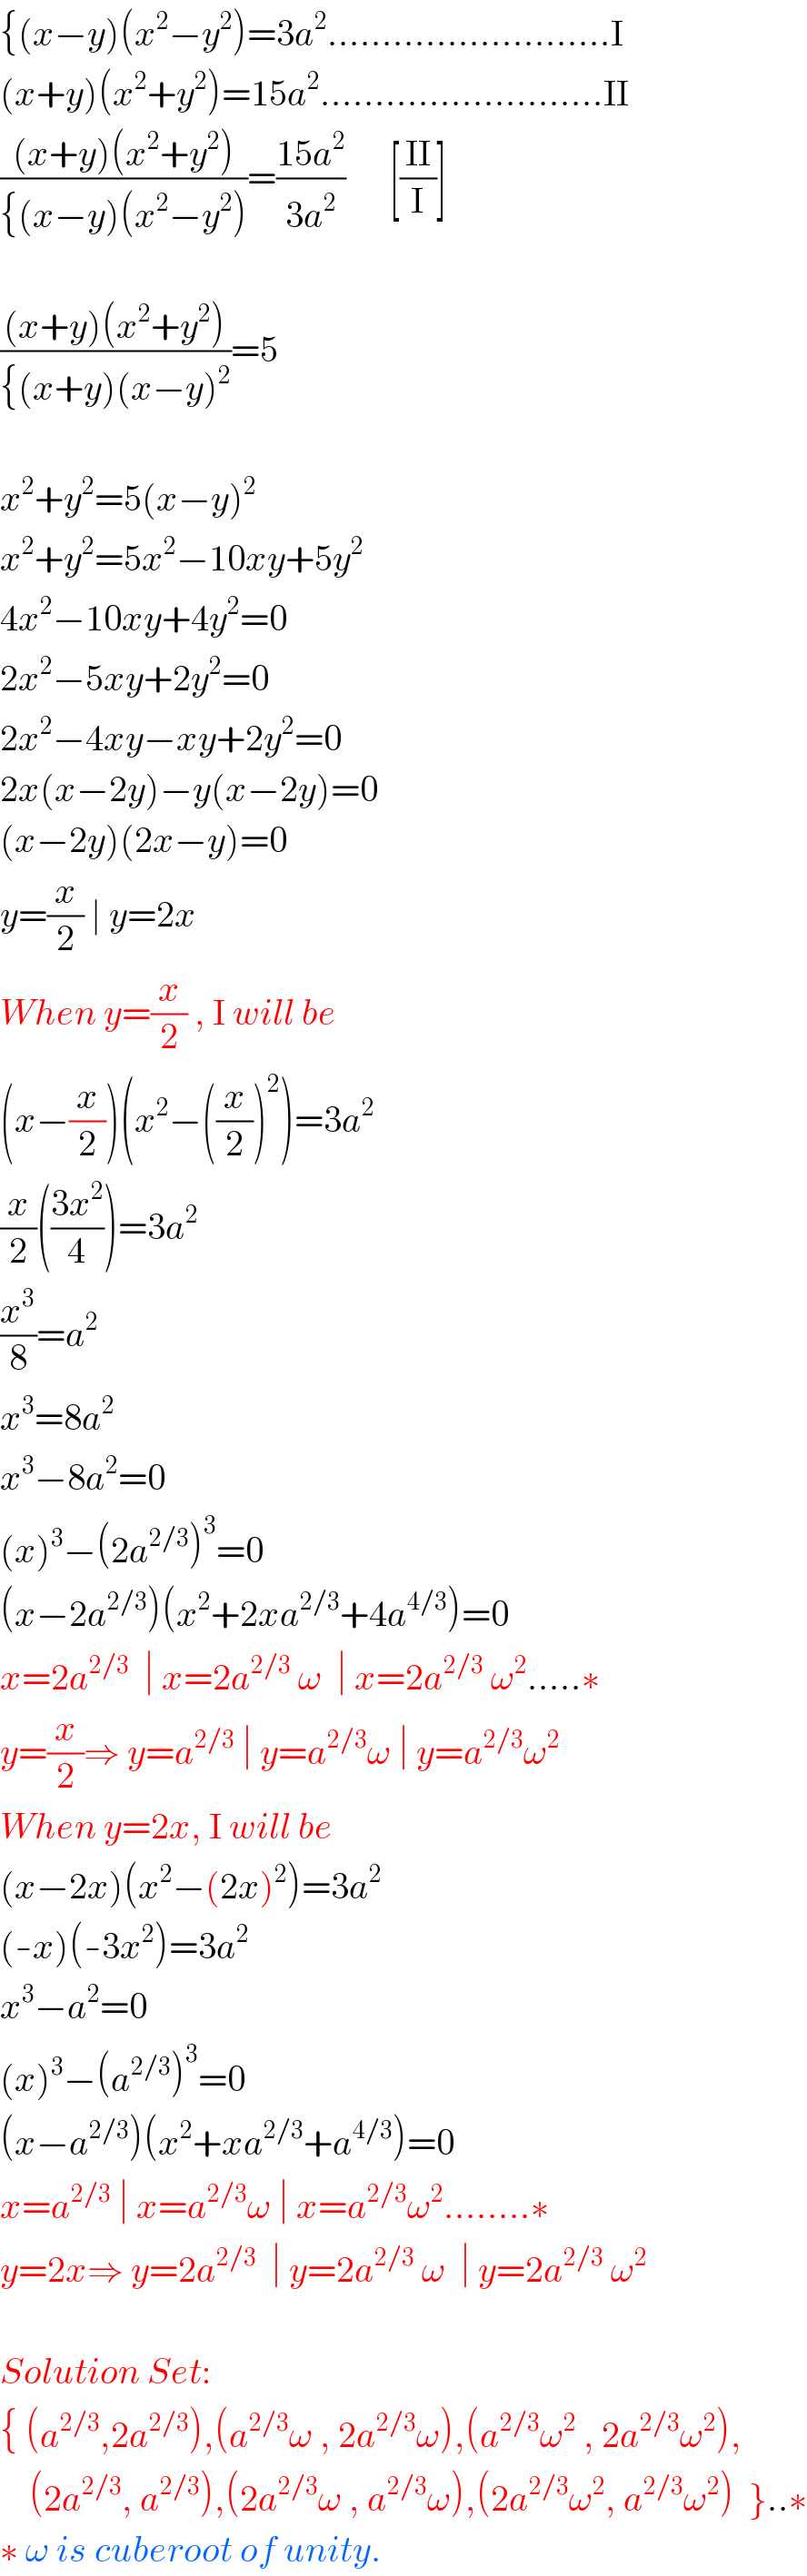 {(x−y)(x^2 −y^2 )=3a^2 ..........................I  (x+y)(x^2 +y^2 )=15a^2 ..........................II  (((x+y)(x^2 +y^2 ))/({(x−y)(x^2 −y^2 )))=((15a^2 )/(3a^2 ))      [((II)/I)]    (((x+y)(x^2 +y^2 ))/({(x+y)(x−y)^2 ))=5    x^2 +y^2 =5(x−y)^2   x^2 +y^2 =5x^2 −10xy+5y^2   4x^2 −10xy+4y^2 =0  2x^2 −5xy+2y^2 =0  2x^2 −4xy−xy+2y^2 =0  2x(x−2y)−y(x−2y)=0  (x−2y)(2x−y)=0  y=(x/2) ∣ y=2x  When y=(x/2) , I will be  (x−(x/2))(x^2 −((x/2))^2 )=3a^2   (x/2)(((3x^2 )/4))=3a^2   (x^3 /8)=a^2   x^3 =8a^2   x^3 −8a^2 =0  (x)^3 −(2a^(2/3) )^3 =0  (x−2a^(2/3) )(x^2 +2xa^(2/3) +4a^(4/3) )=0  x=2a^(2/3)   ∣ x=2a^(2/3)  ω  ∣ x=2a^(2/3)  ω^2 .....∗  y=(x/2)⇒ y=a^(2/3)  ∣ y=a^(2/3) ω ∣ y=a^(2/3) ω^2   When y=2x, I will be  (x−2x)(x^2 −(2x)^2 )=3a^2   (-x)(-3x^2 )=3a^2   x^3 −a^2 =0  (x)^3 −(a^(2/3) )^3 =0  (x−a^(2/3) )(x^2 +xa^(2/3) +a^(4/3) )=0  x=a^(2/3)  ∣ x=a^(2/3) ω ∣ x=a^(2/3) ω^2 ........∗  y=2x⇒ y=2a^(2/3)   ∣ y=2a^(2/3)  ω  ∣ y=2a^(2/3)  ω^2     Solution Set:  { (a^(2/3) ,2a^(2/3) ),(a^(2/3) ω , 2a^(2/3) ω),(a^(2/3) ω^2  , 2a^(2/3) ω^2 ),      (2a^(2/3) , a^(2/3) ),(2a^(2/3) ω , a^(2/3) ω),(2a^(2/3) ω^2 , a^(2/3) ω^2 )  }..∗  ∗ ω is cuberoot of unity.  